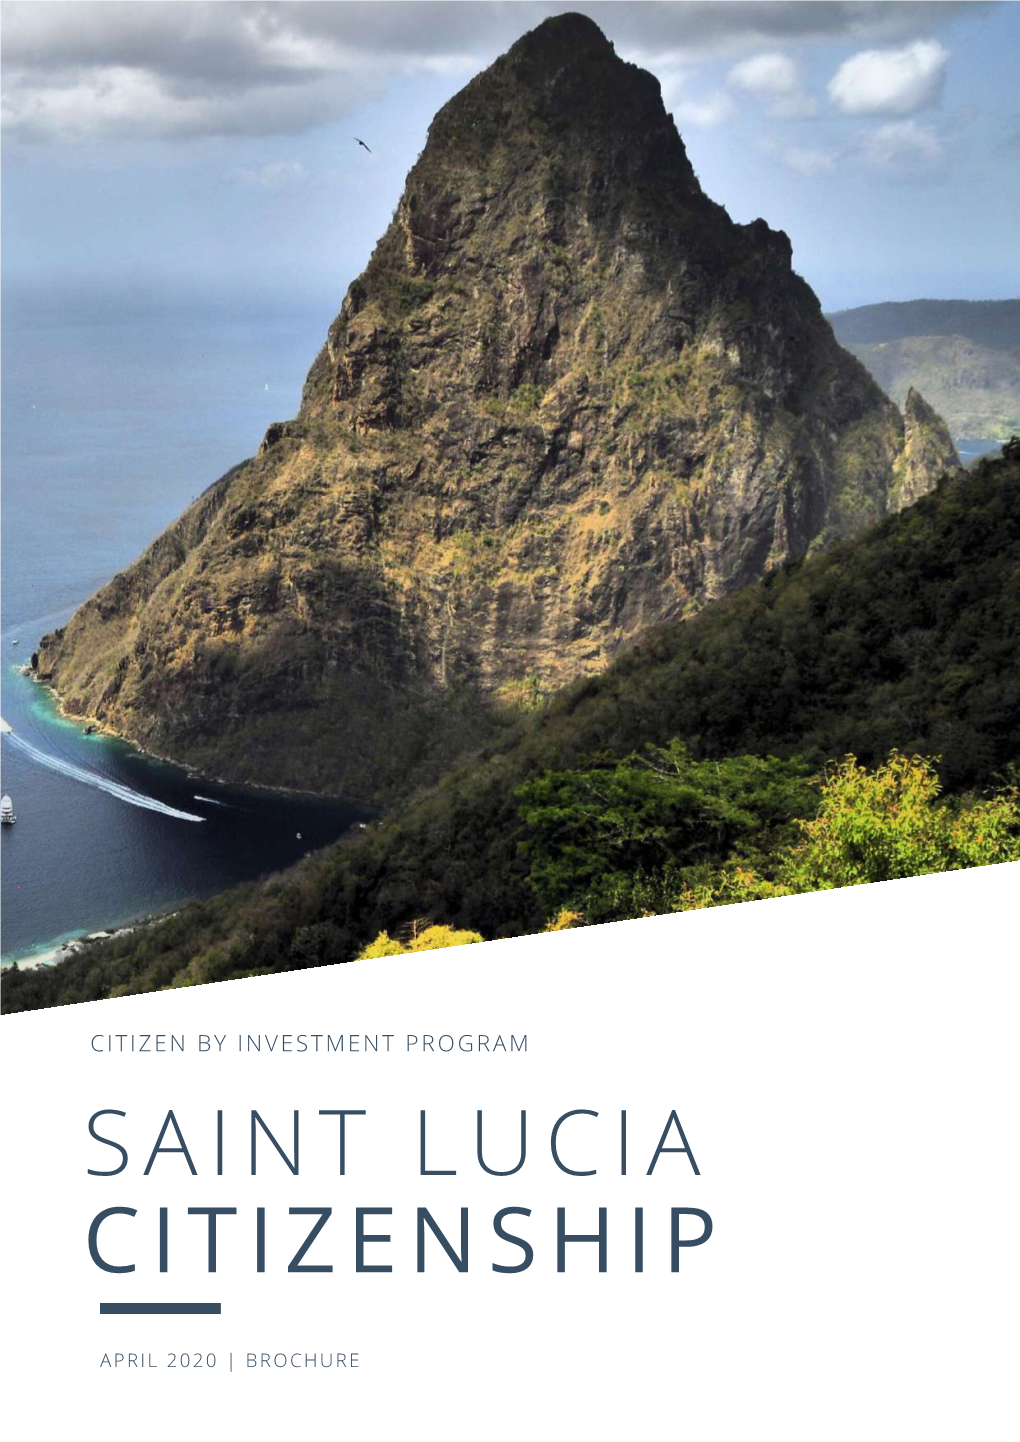 Saint Lucia Citizenship